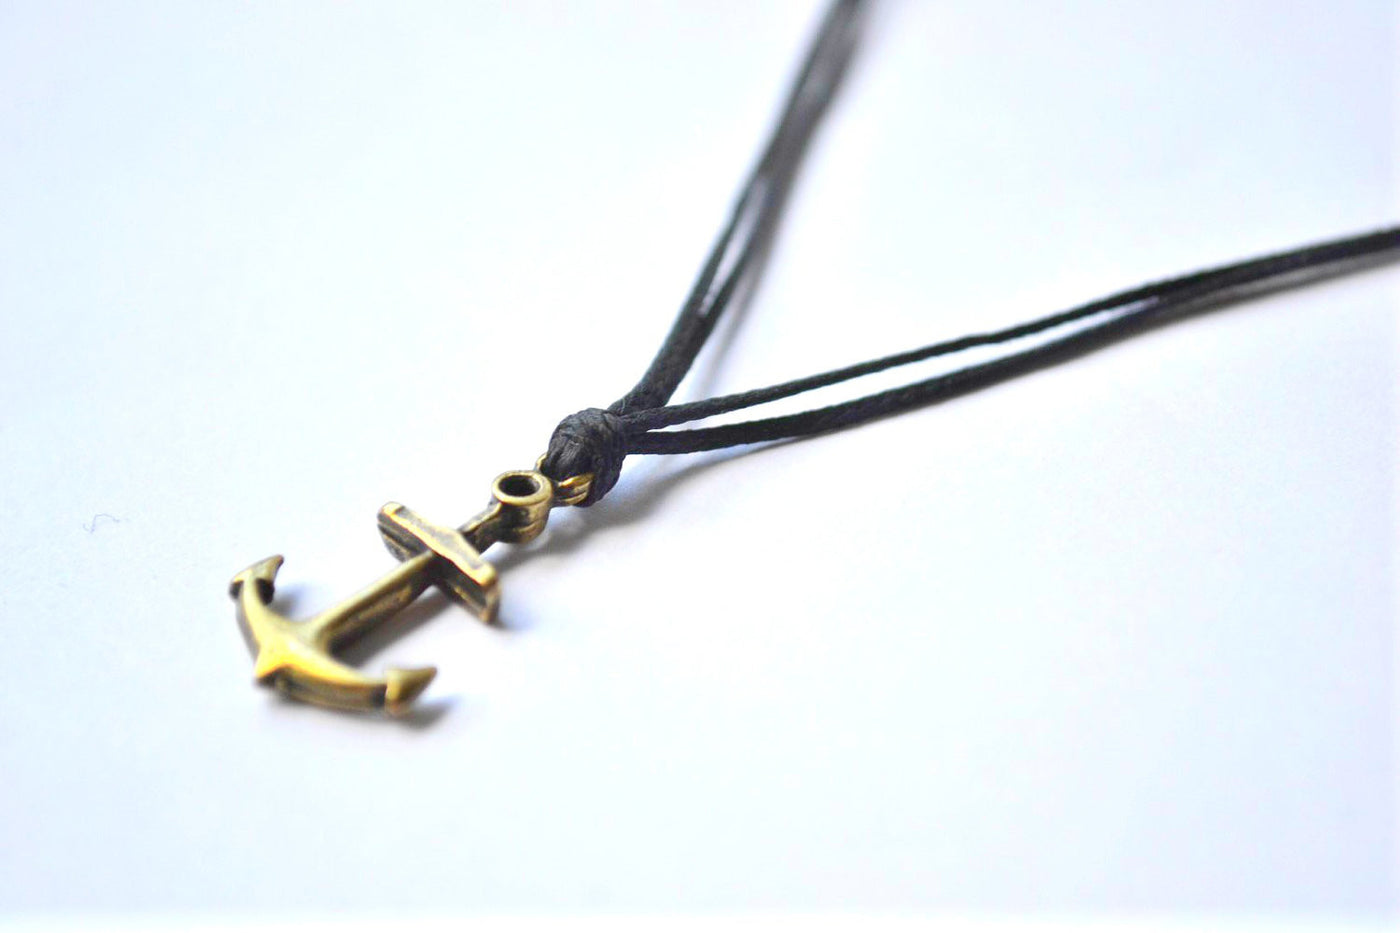 Anchor necklace for men, men's anchor necklace with a black wax